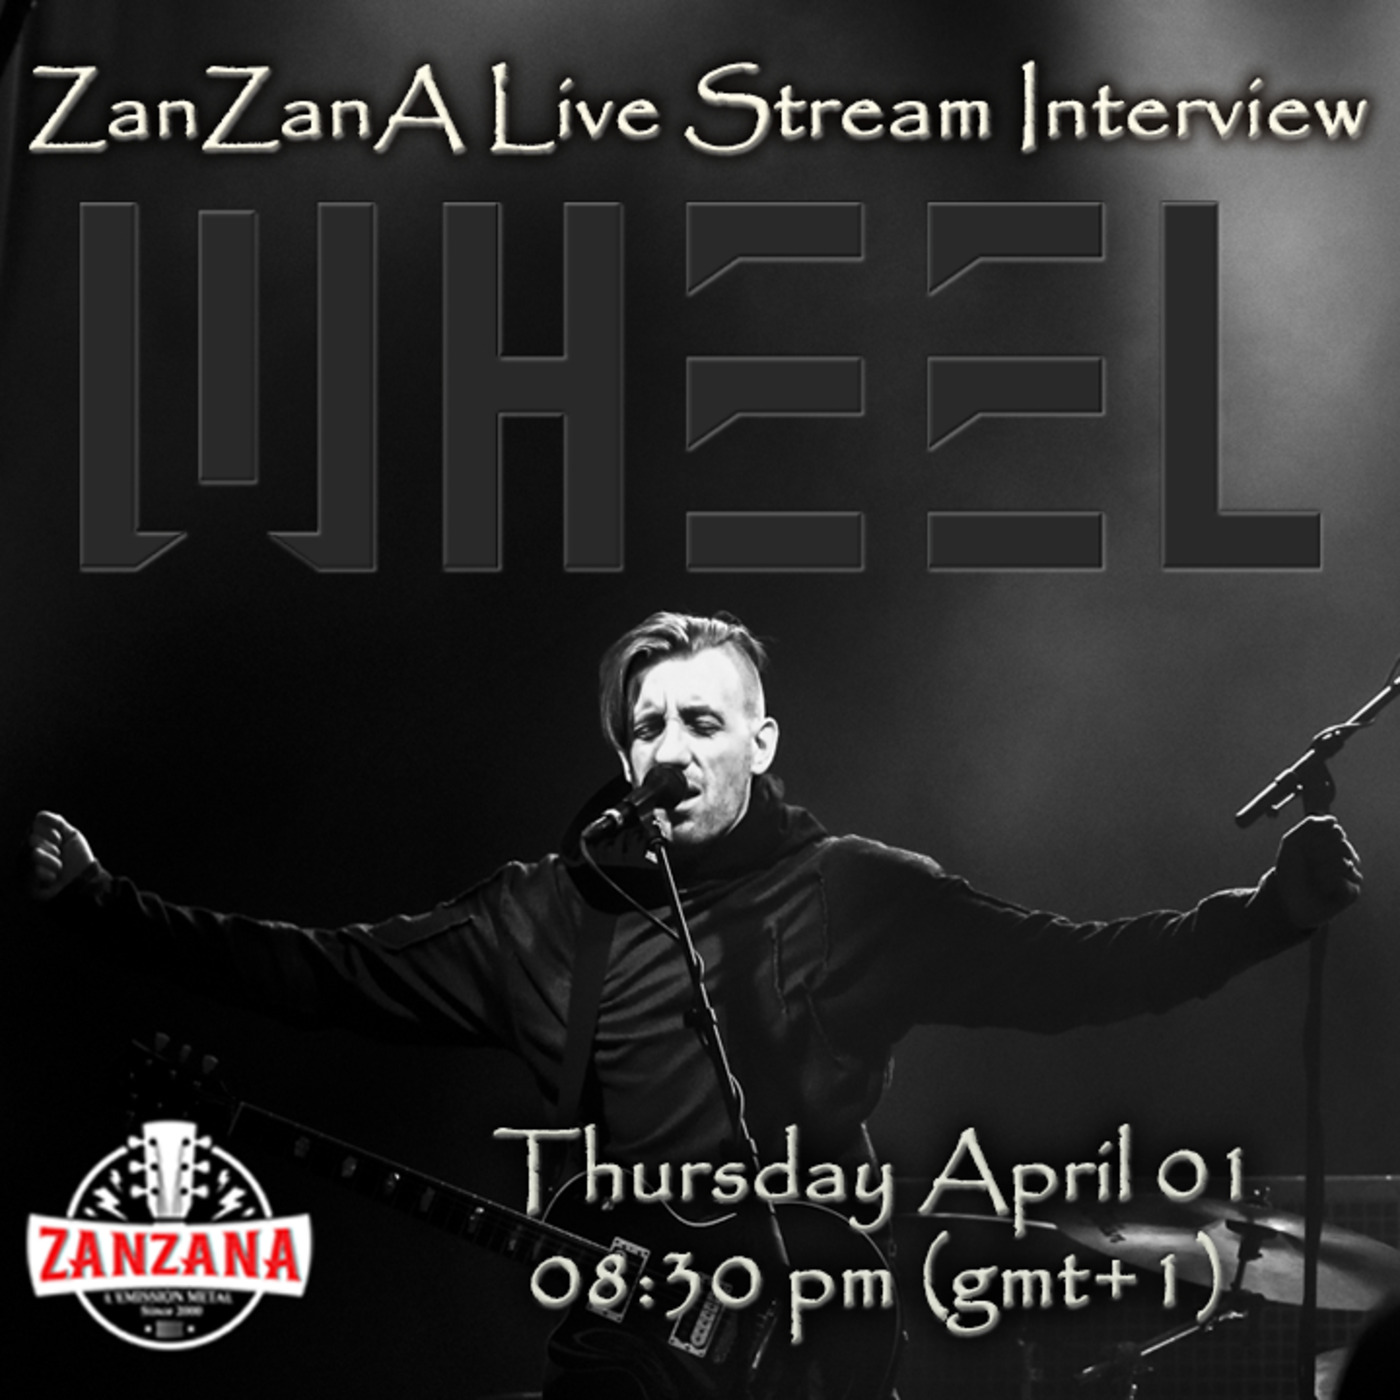 WHEEL, James Lascelles interview about ”Resident Human” - ZanZanA Live Stream Metal Interviews - thursday April 01 2021